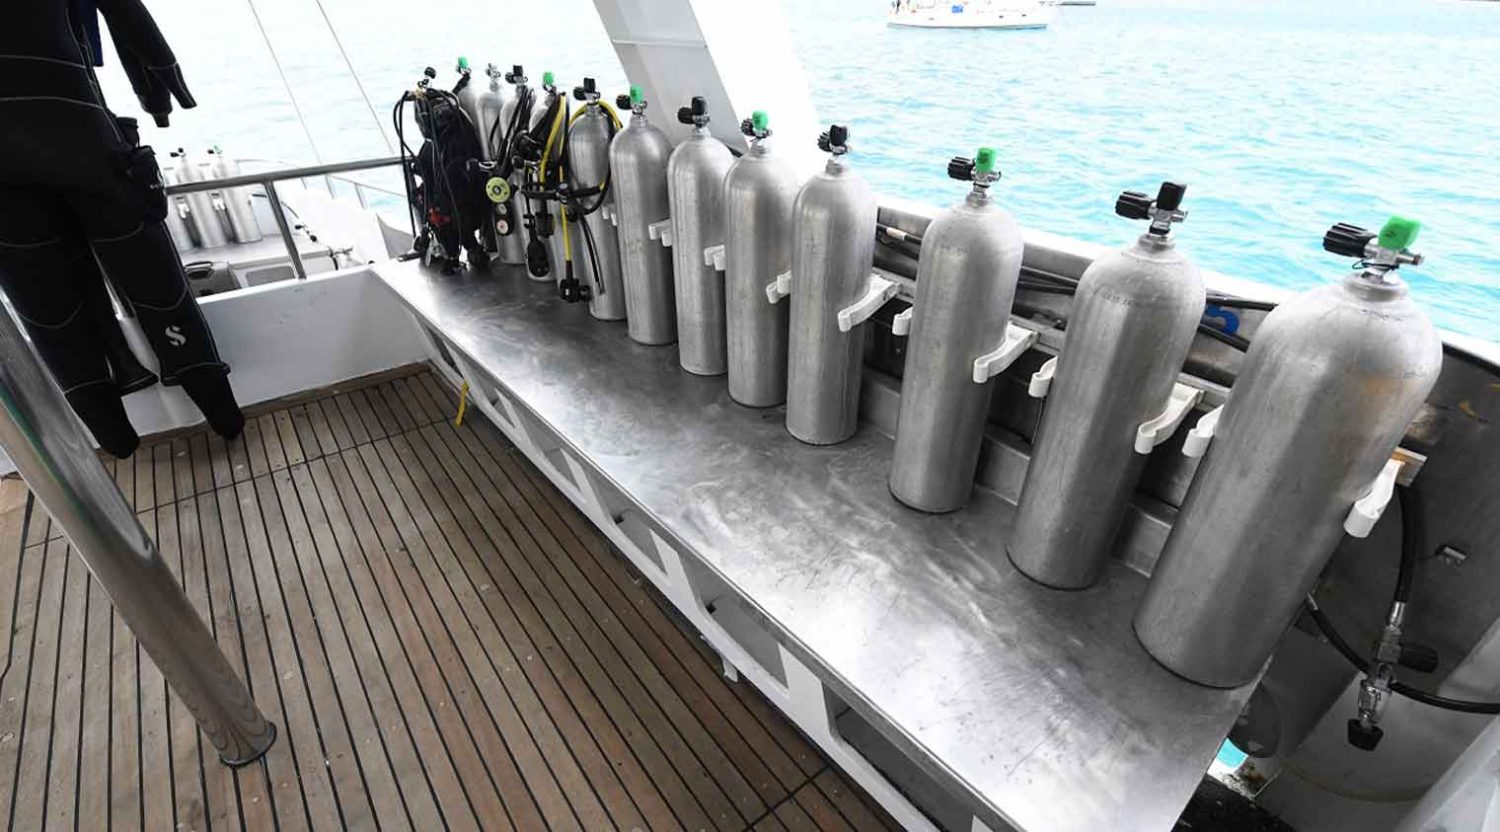 humboldt explorer yacht scuba diving oxygen tanks of galapagos islands